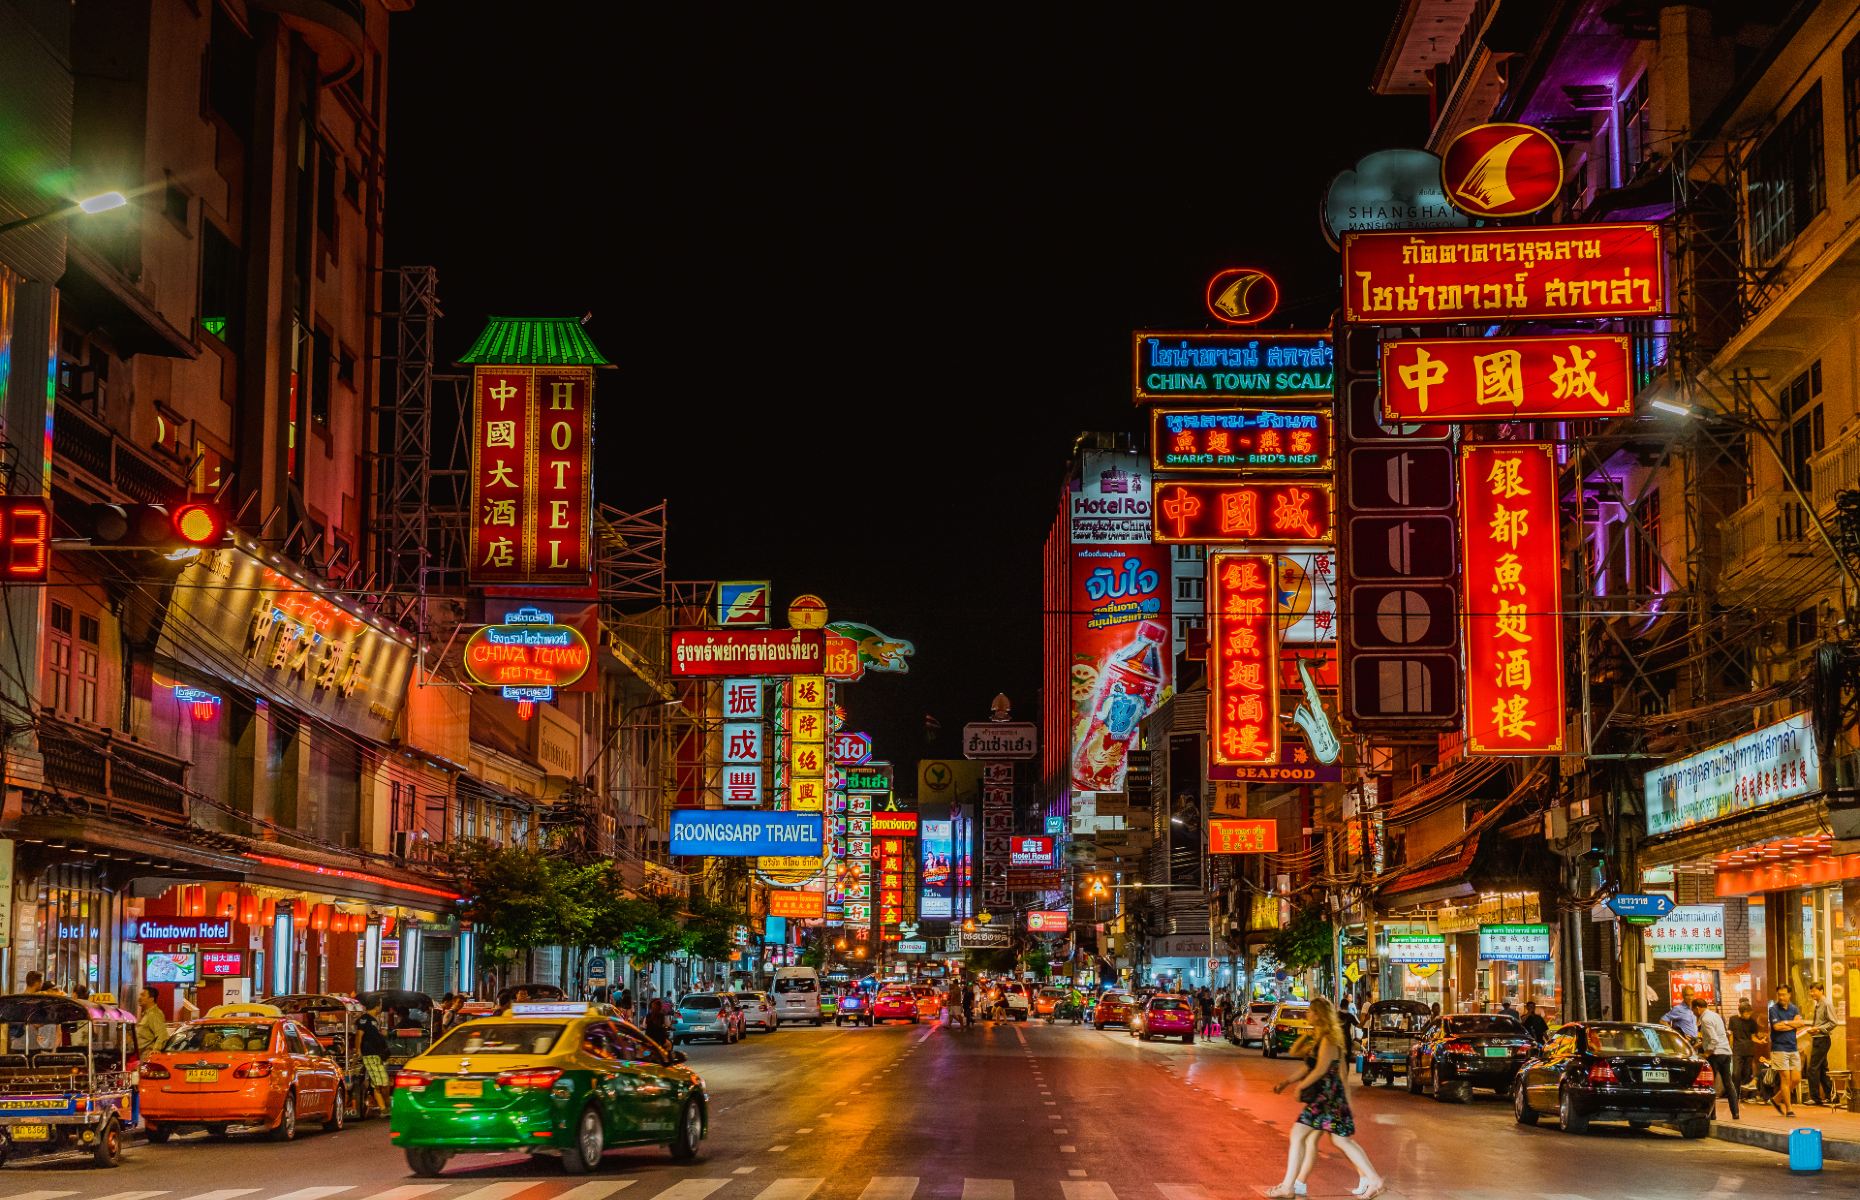 Chinatown Bangkok (Image: MR SUTTICHAI CHALOKUL/Shutterstock)